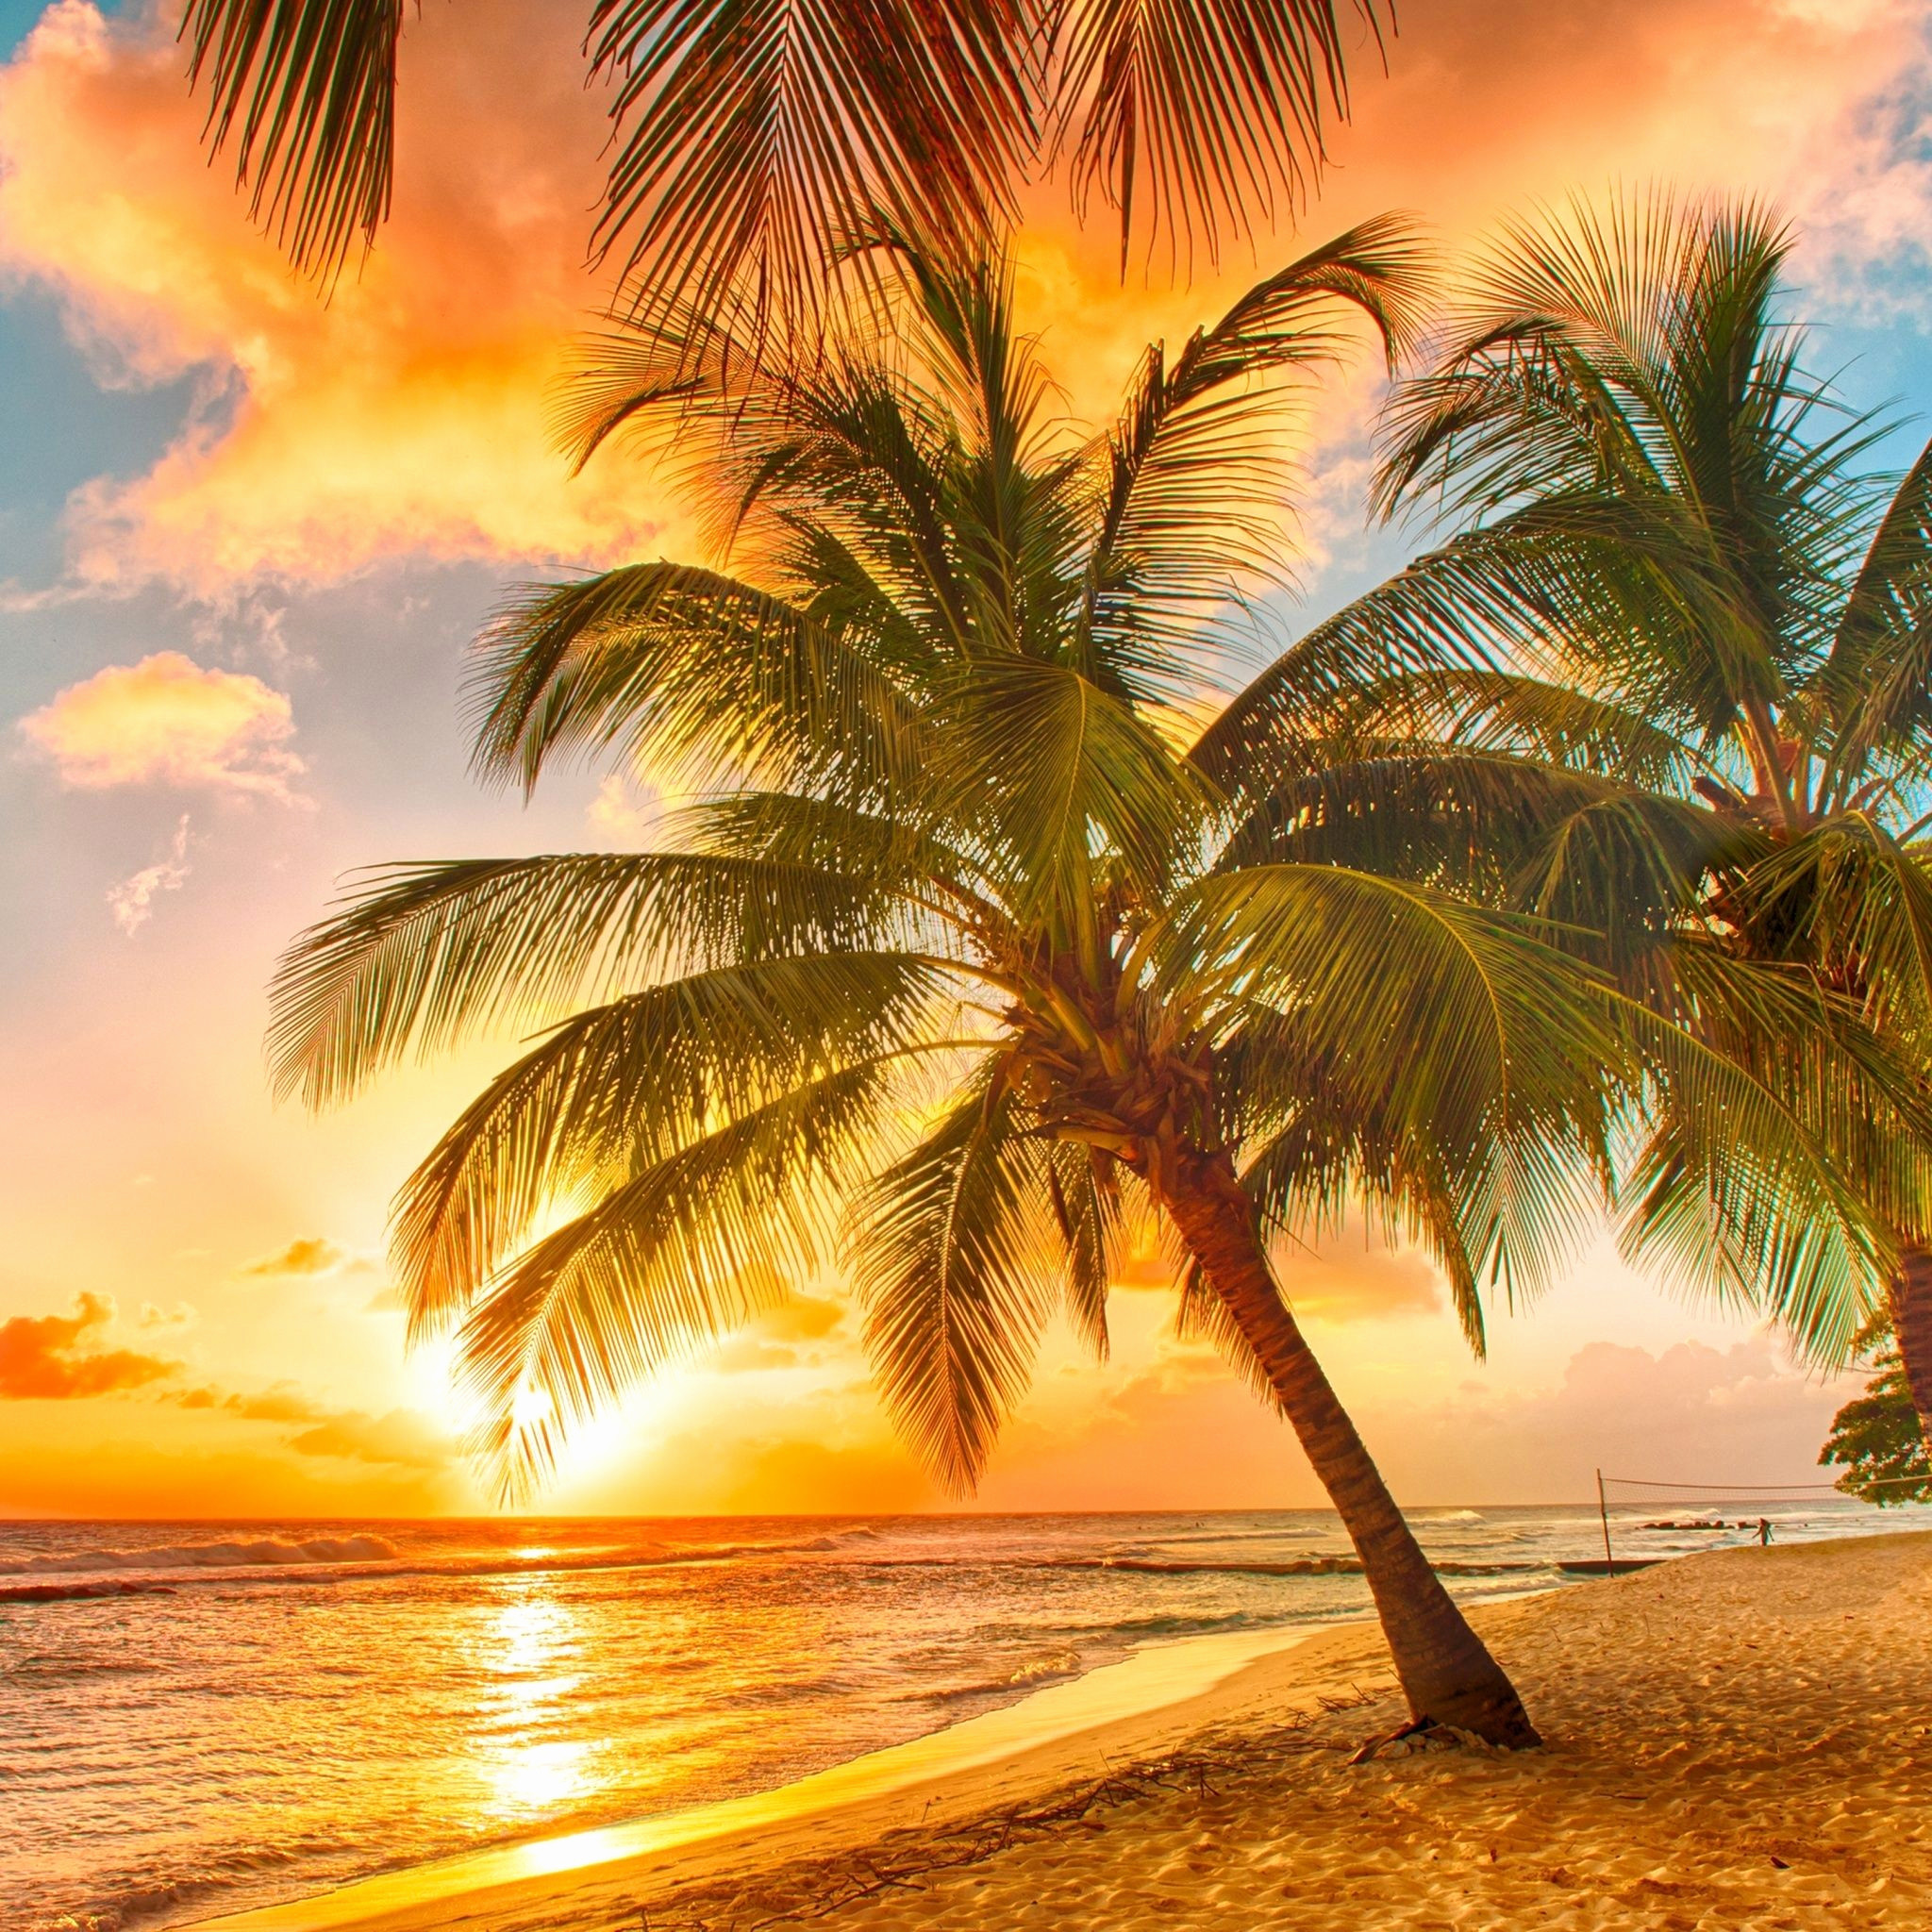 2048x2048, Palm Tree Wallpaper Awesome Palm Trees Beach - Tropical Beach Sunset Hd - 2048x2048